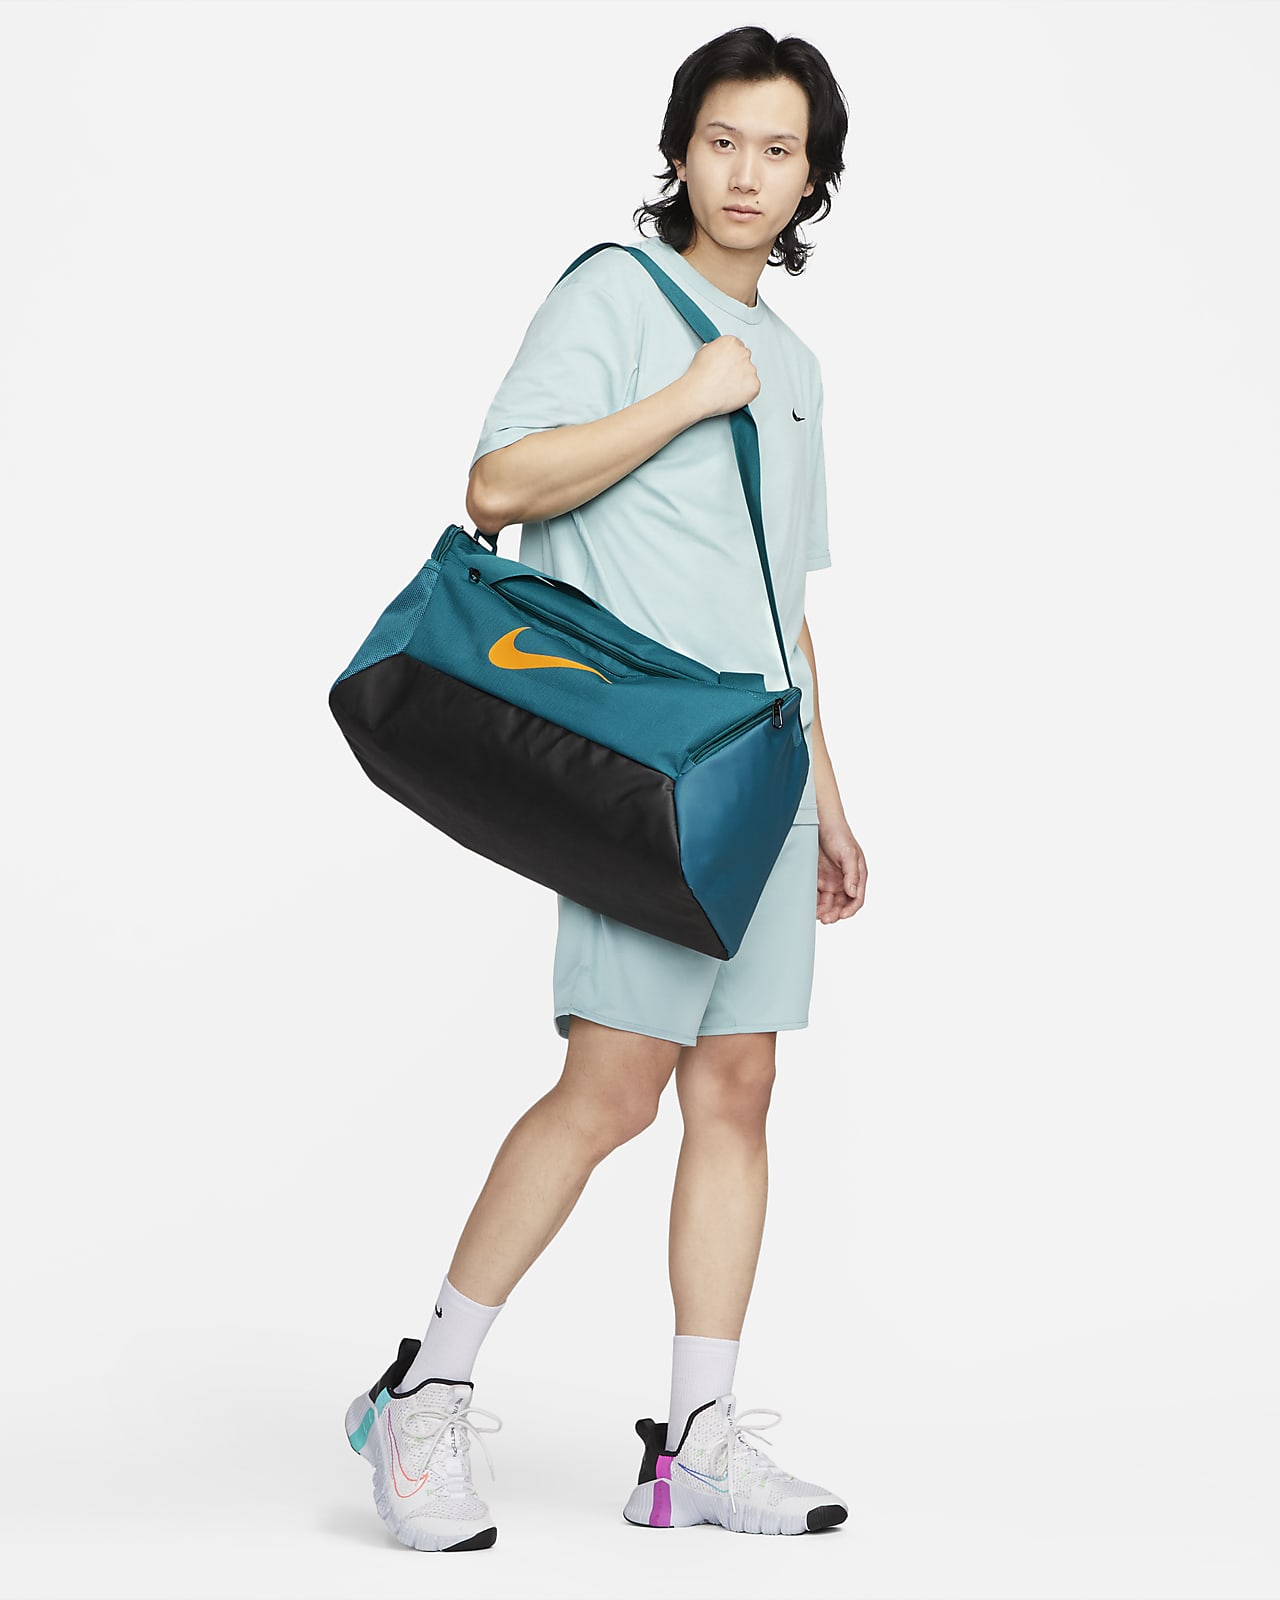 Nike® Brasilia Training Small Duffel Bag